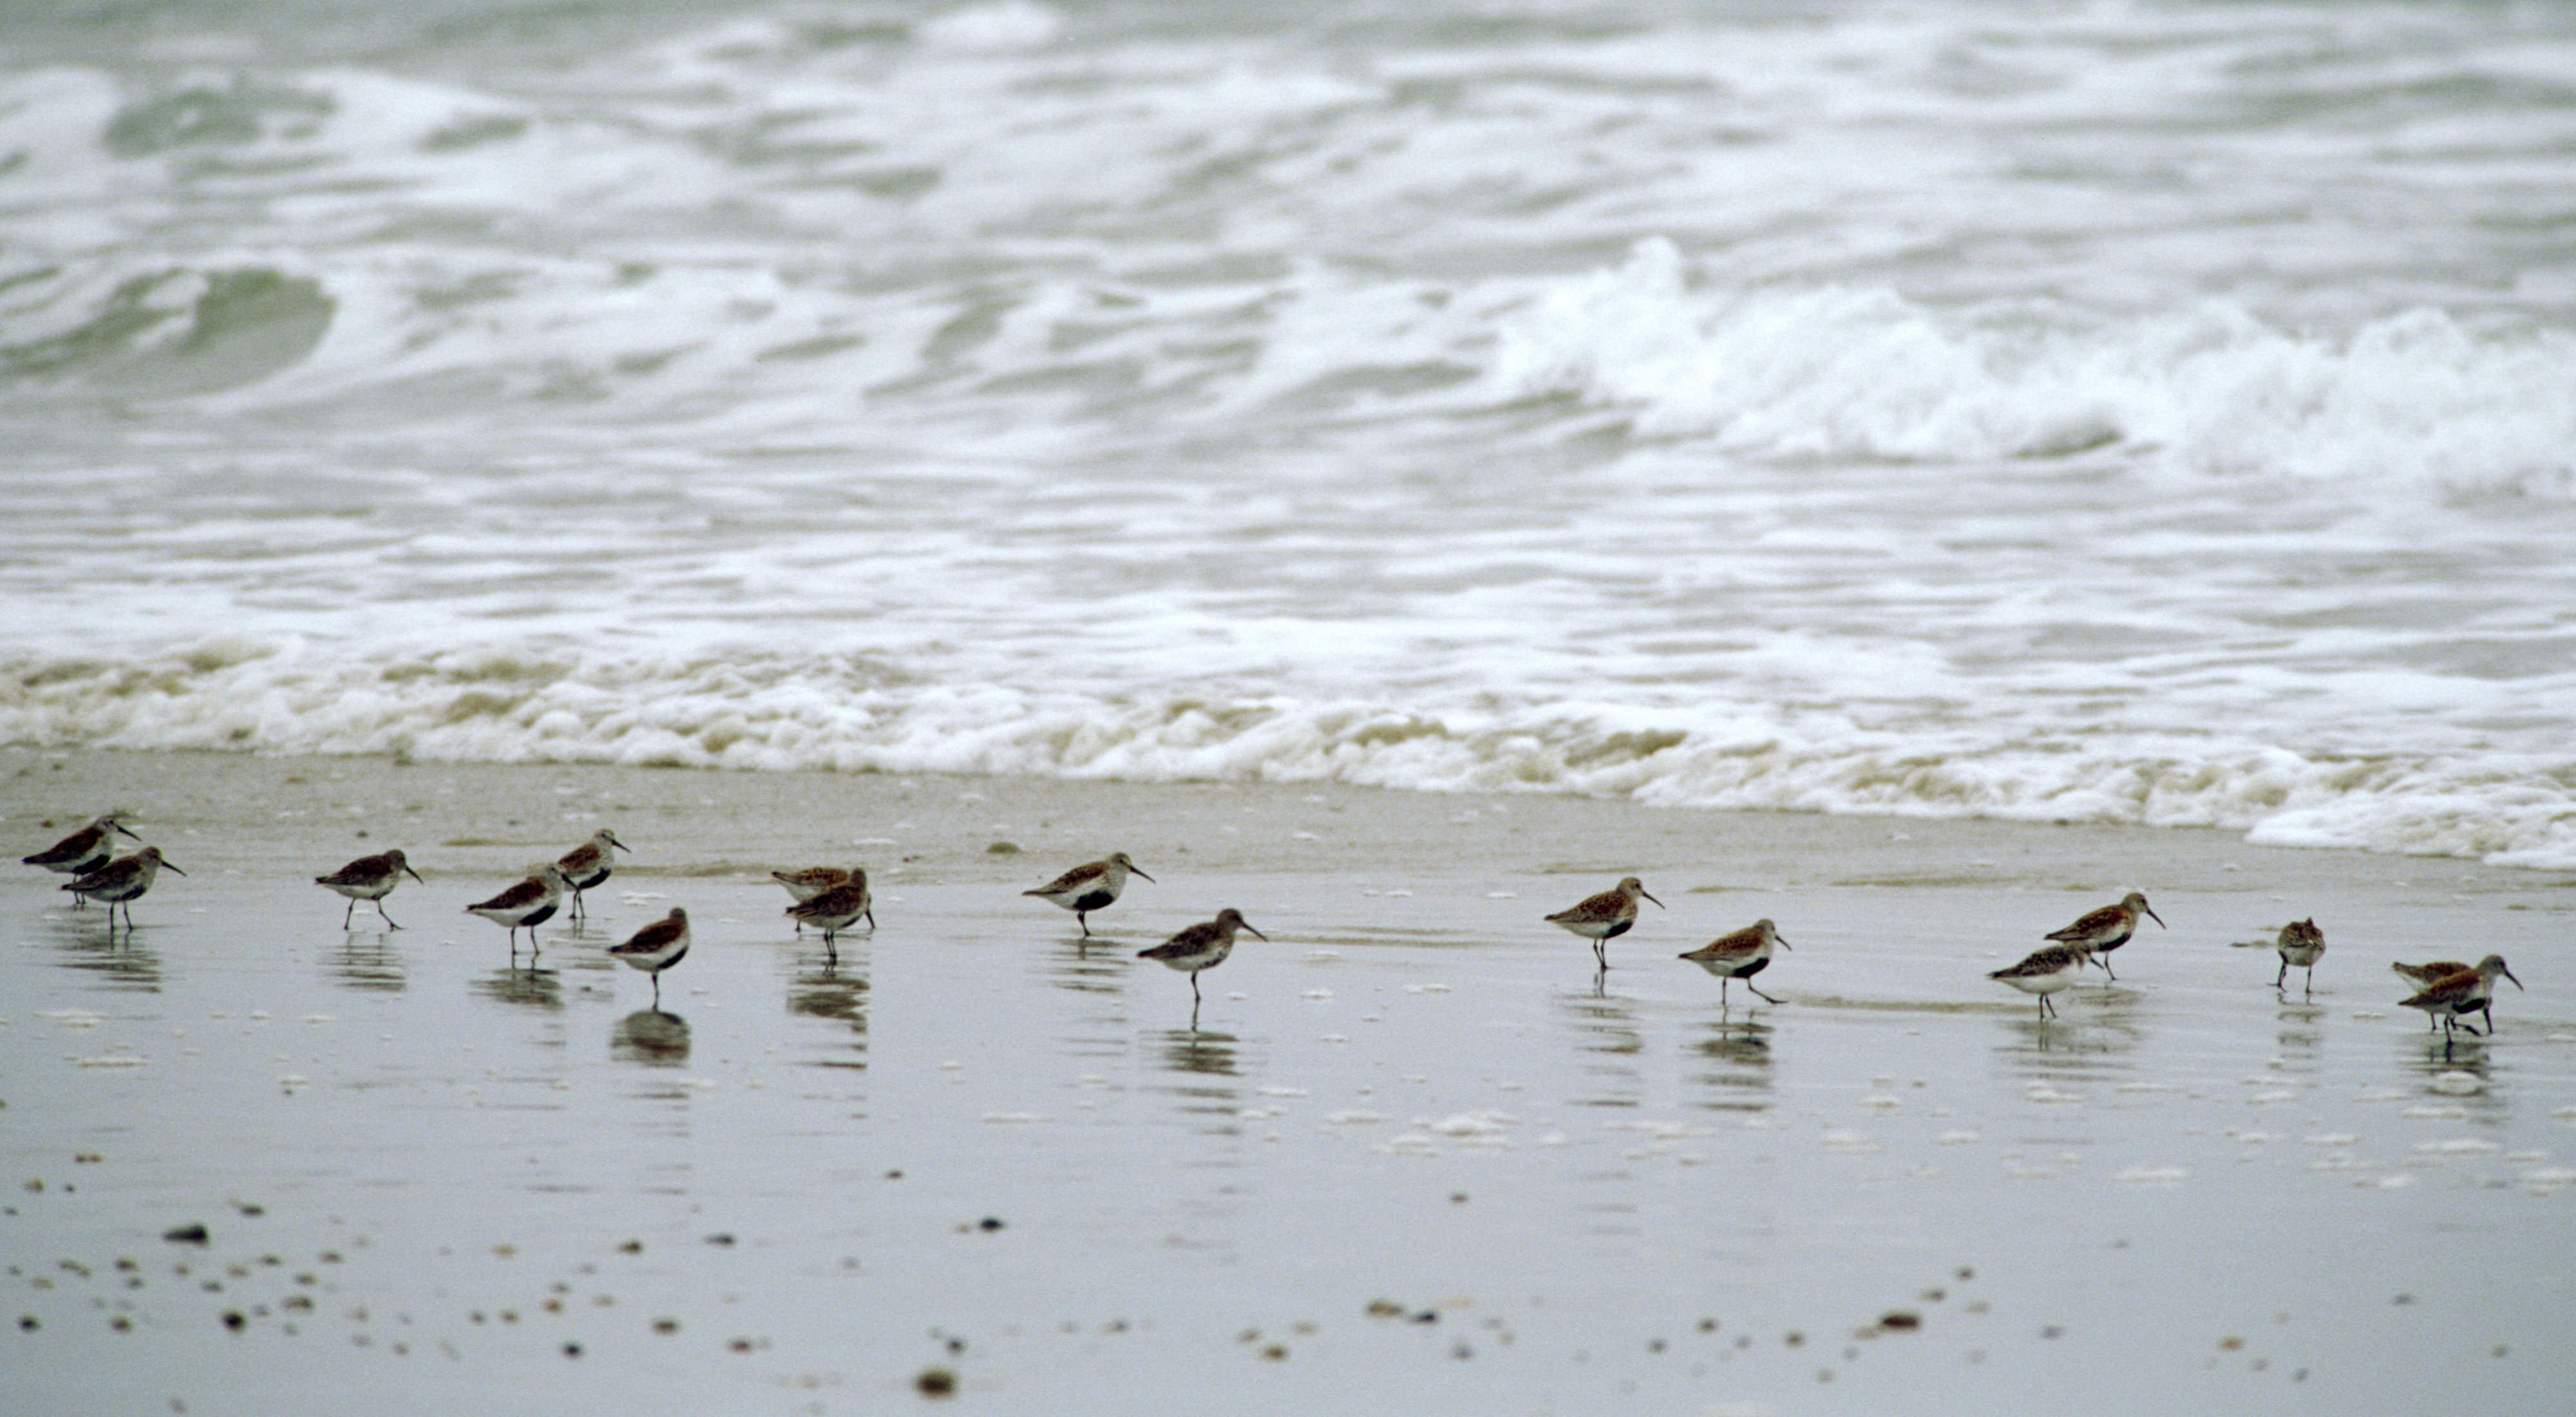 A dozen small shorebirds run along the edge of the surf, probing the sand for food.